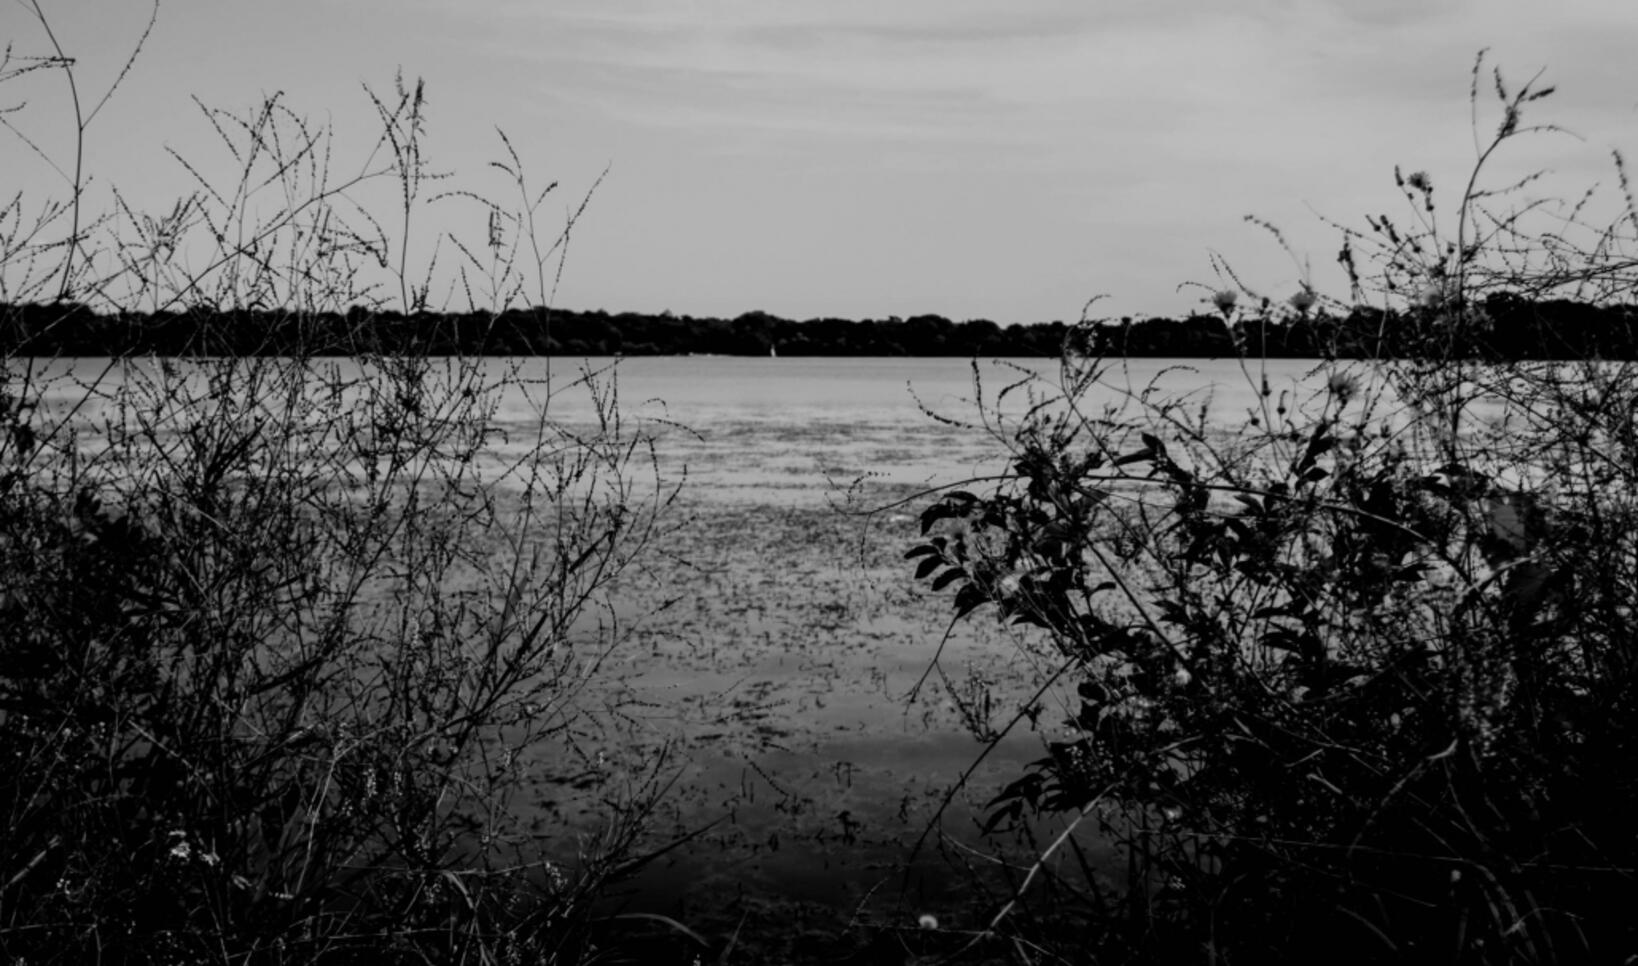 Photograph of Lake Harriet by Dan Nolin ; Photograph of Lake Harriet by Dan Nolin